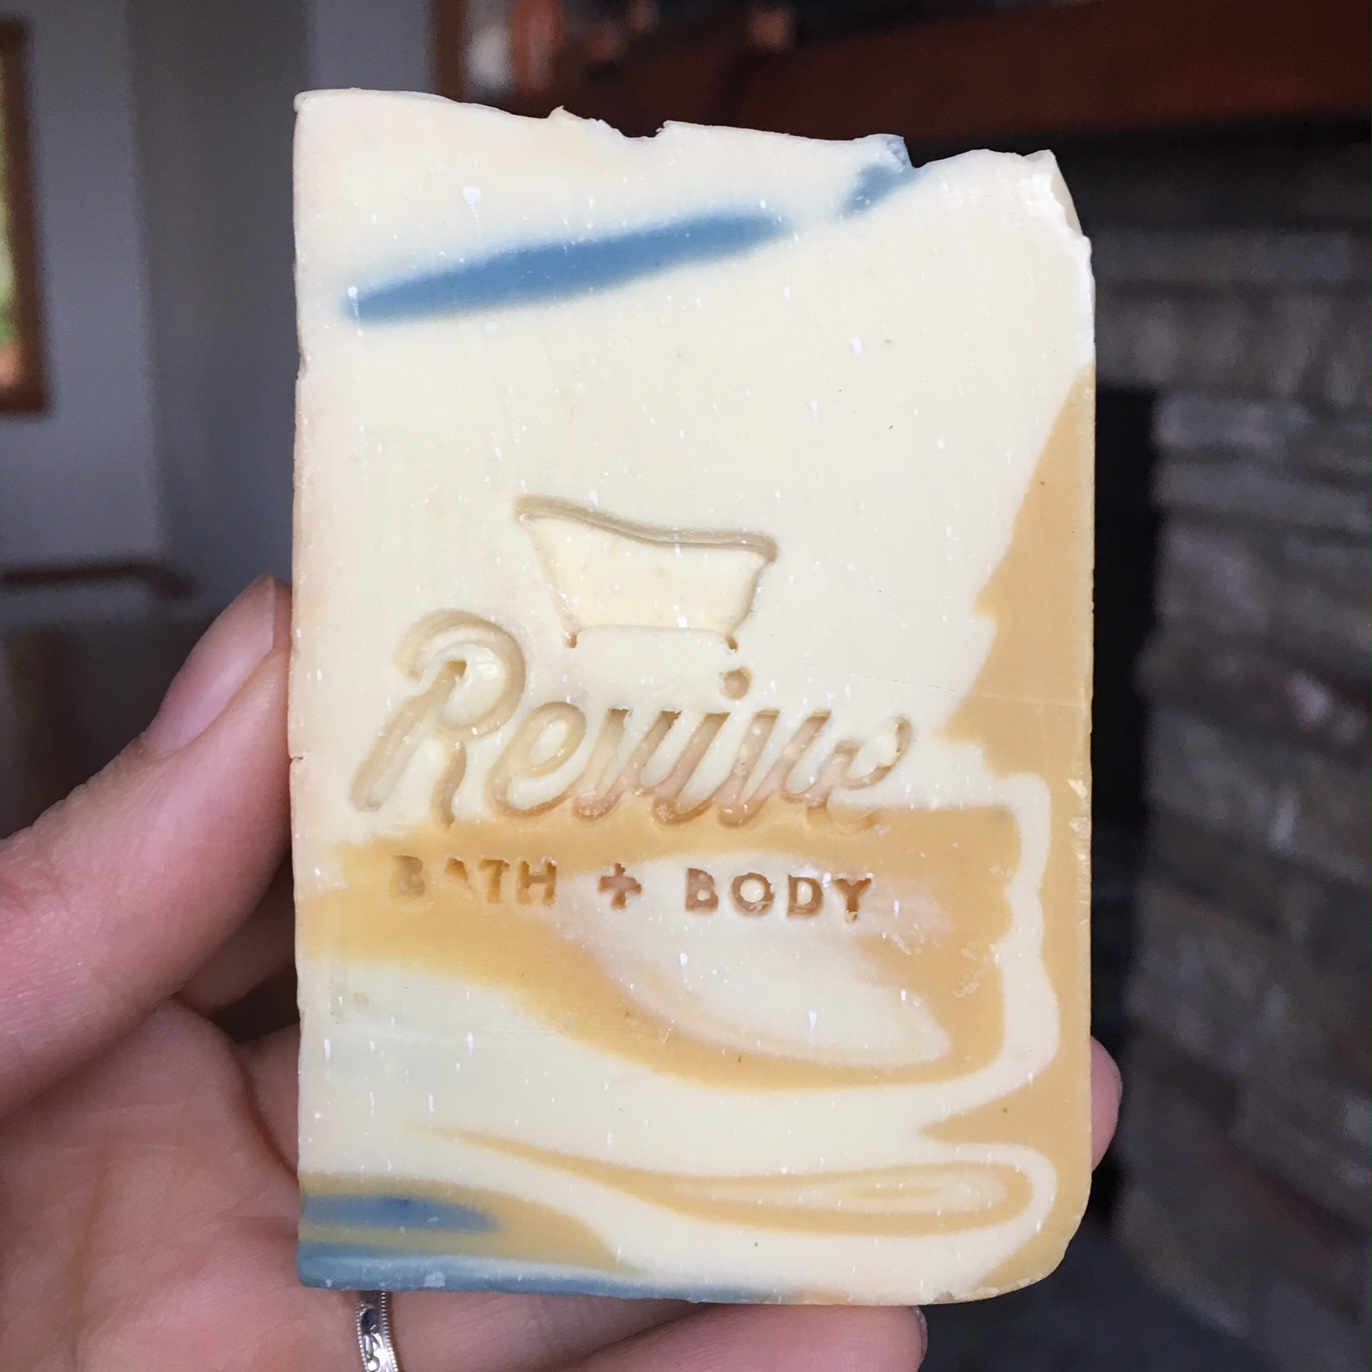 revive-bath-body-soap-bar